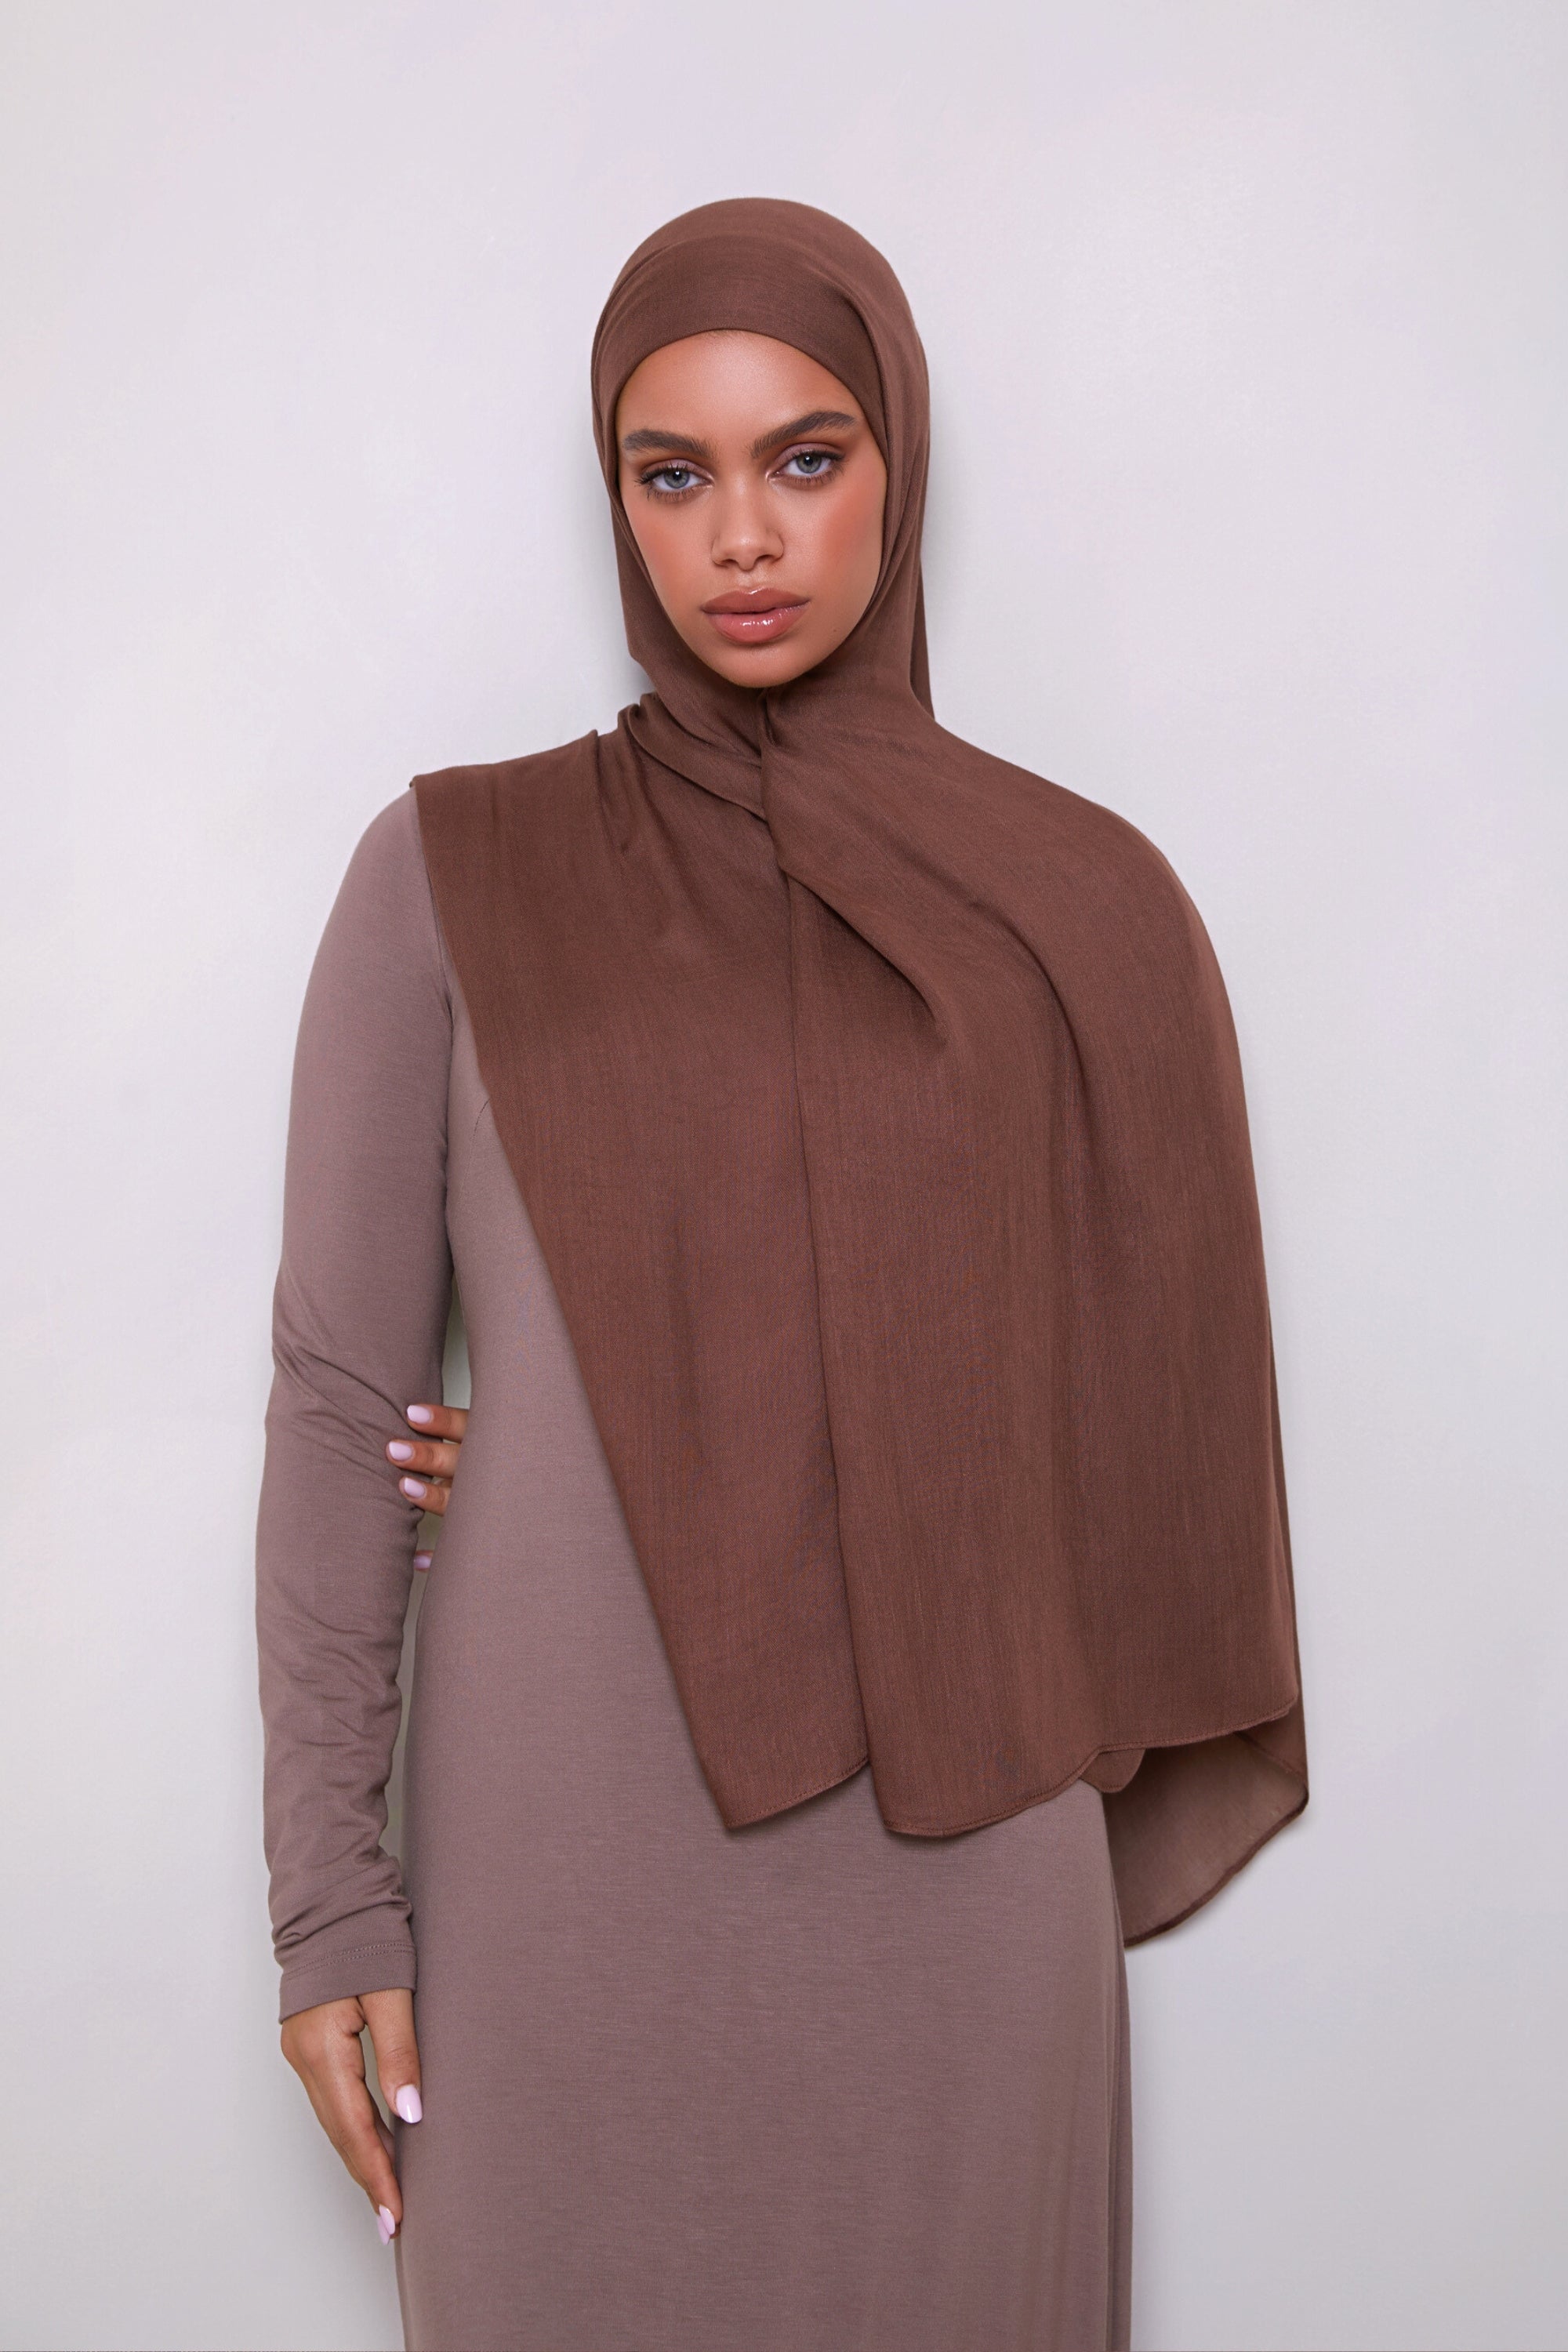 Modal Hijab - Cocoa saigonodysseyhotel 